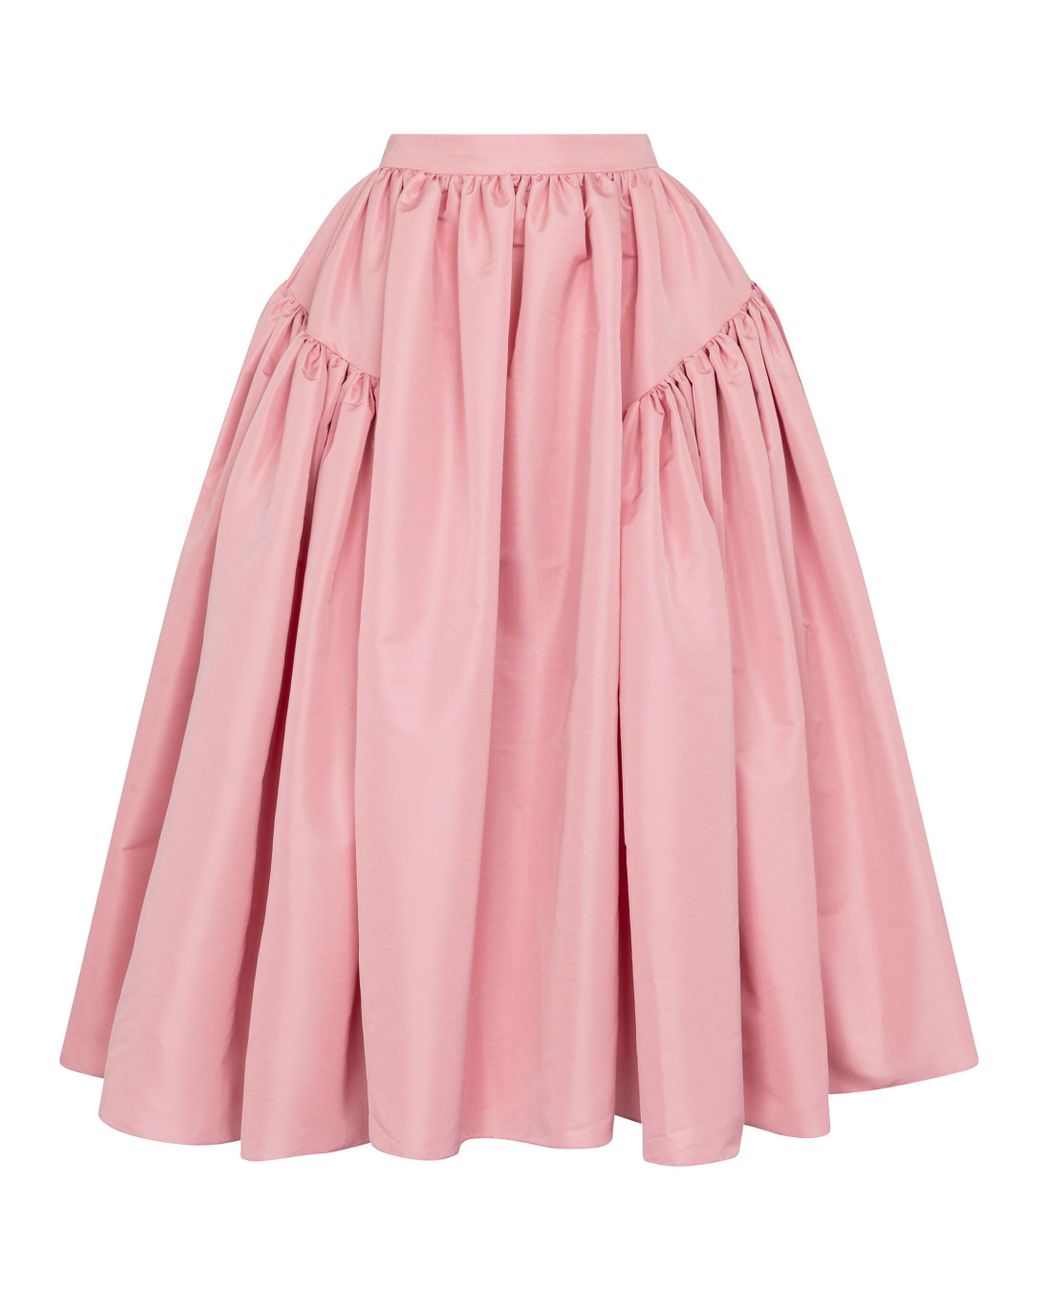 Alexander McQueen Taffeta Midi Skirt in Pink - Lyst